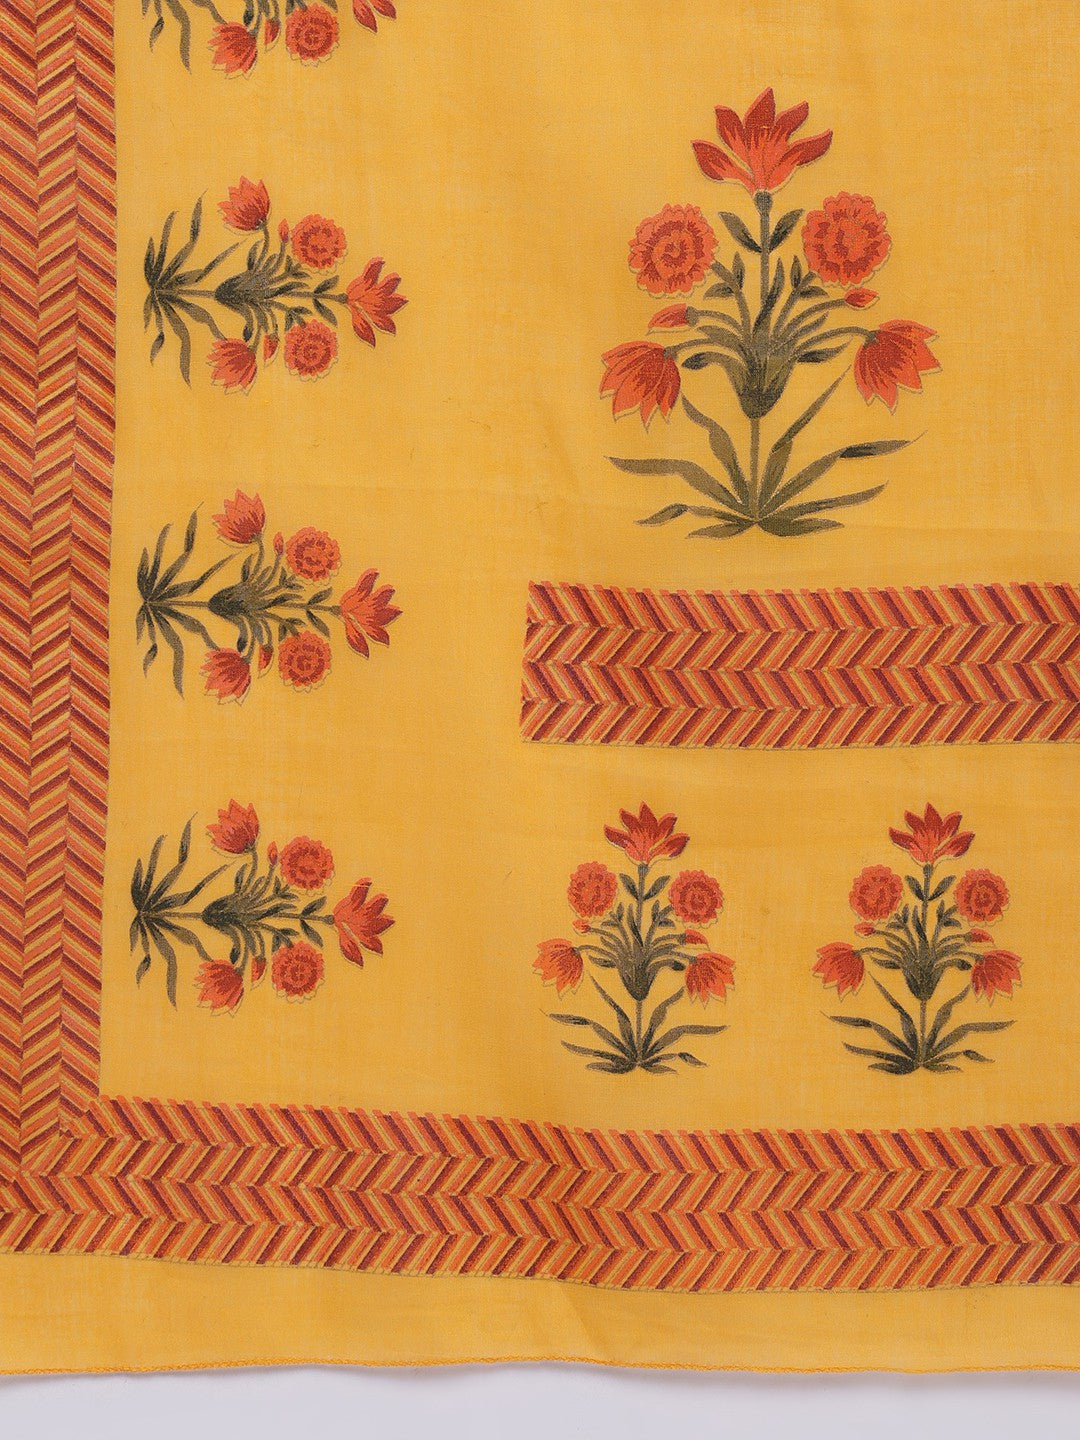 Yellow Embroidered Straight Cotton Kurti Set